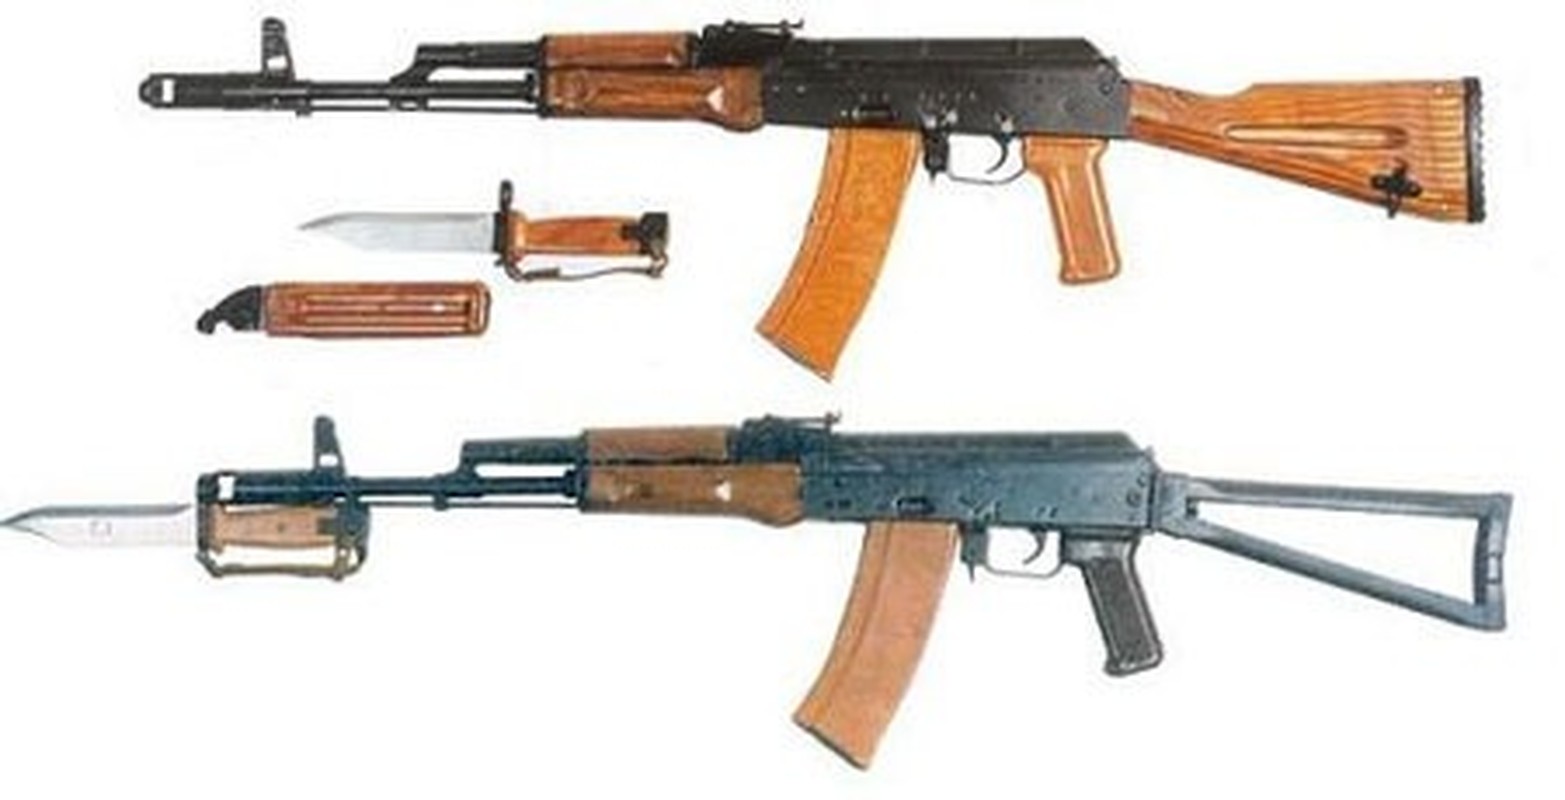 Hau boi AK-74 lieu co thuc su vuot troi so voi AK-47?-Hinh-8